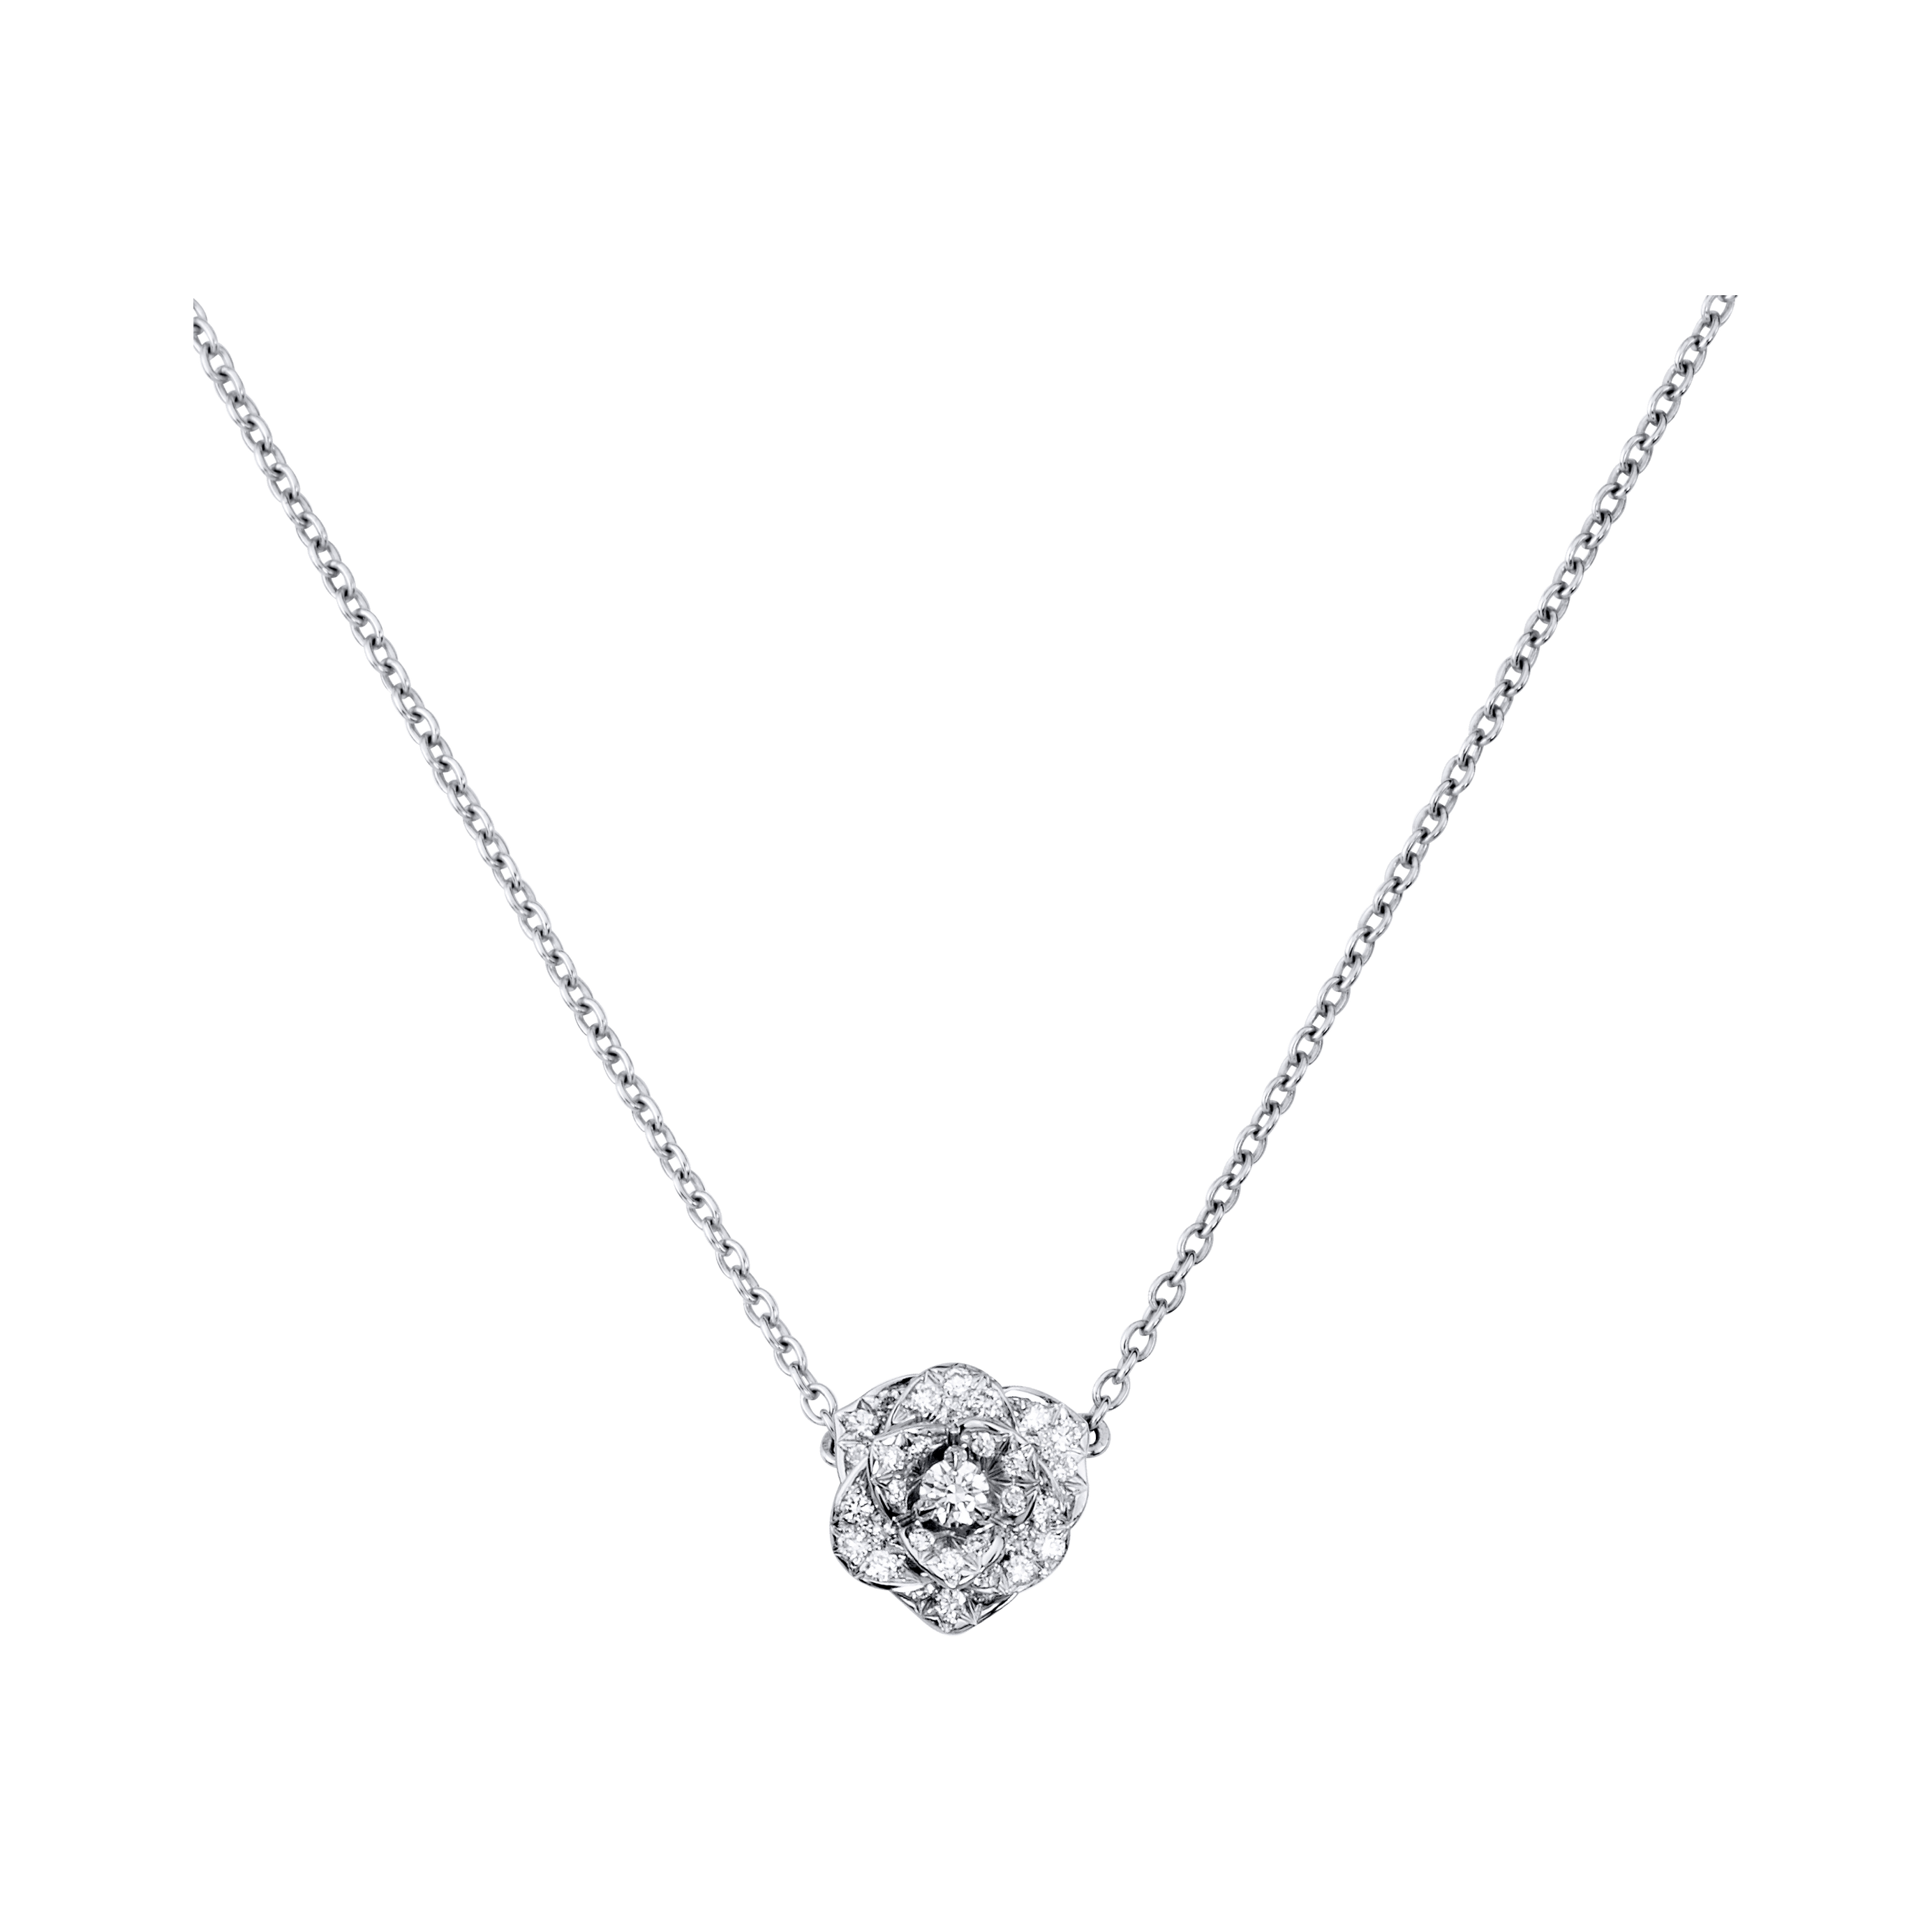 White gold Diamond Pendant G33U0085 - Piaget Luxury Jewelry Online